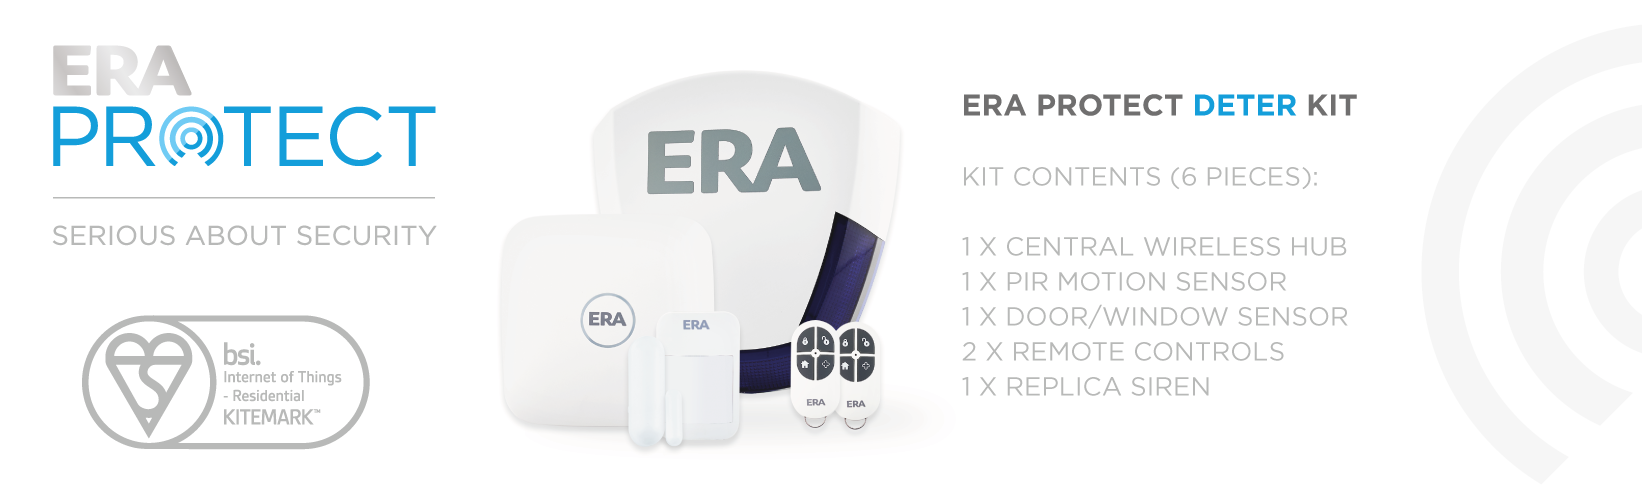 EE-ERA-Protect-Kits-1640x492-Deter.png